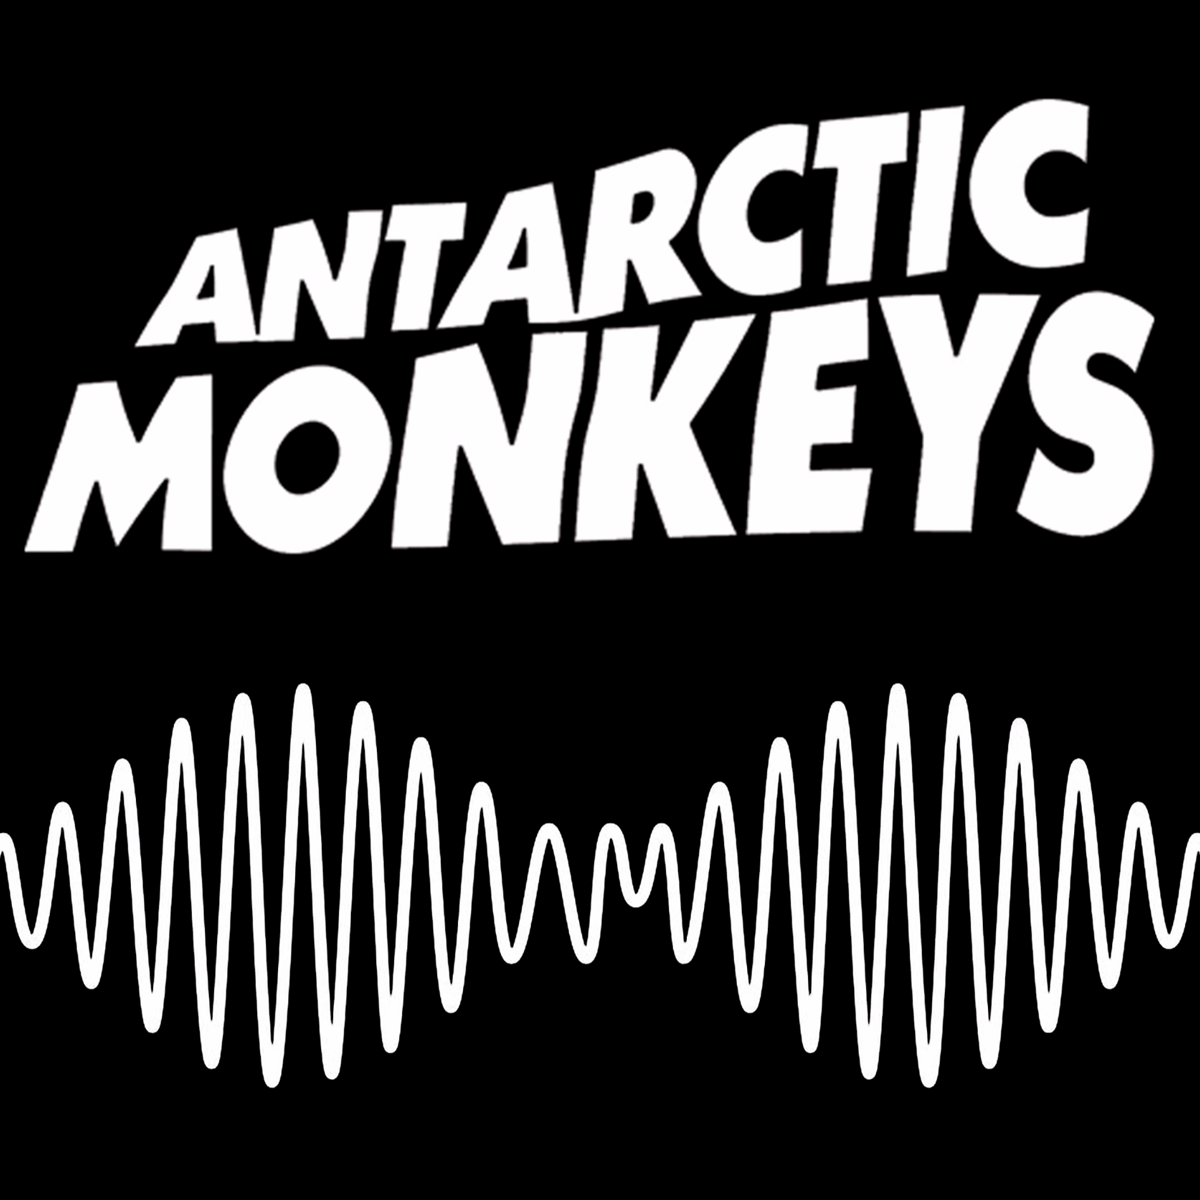 I wanna be your arctic monkeys перевод. Арктик монкейс обложки. Группа Арктик манкис. Arctic Monkeys логотип. Arctic Monkeys am обложка.